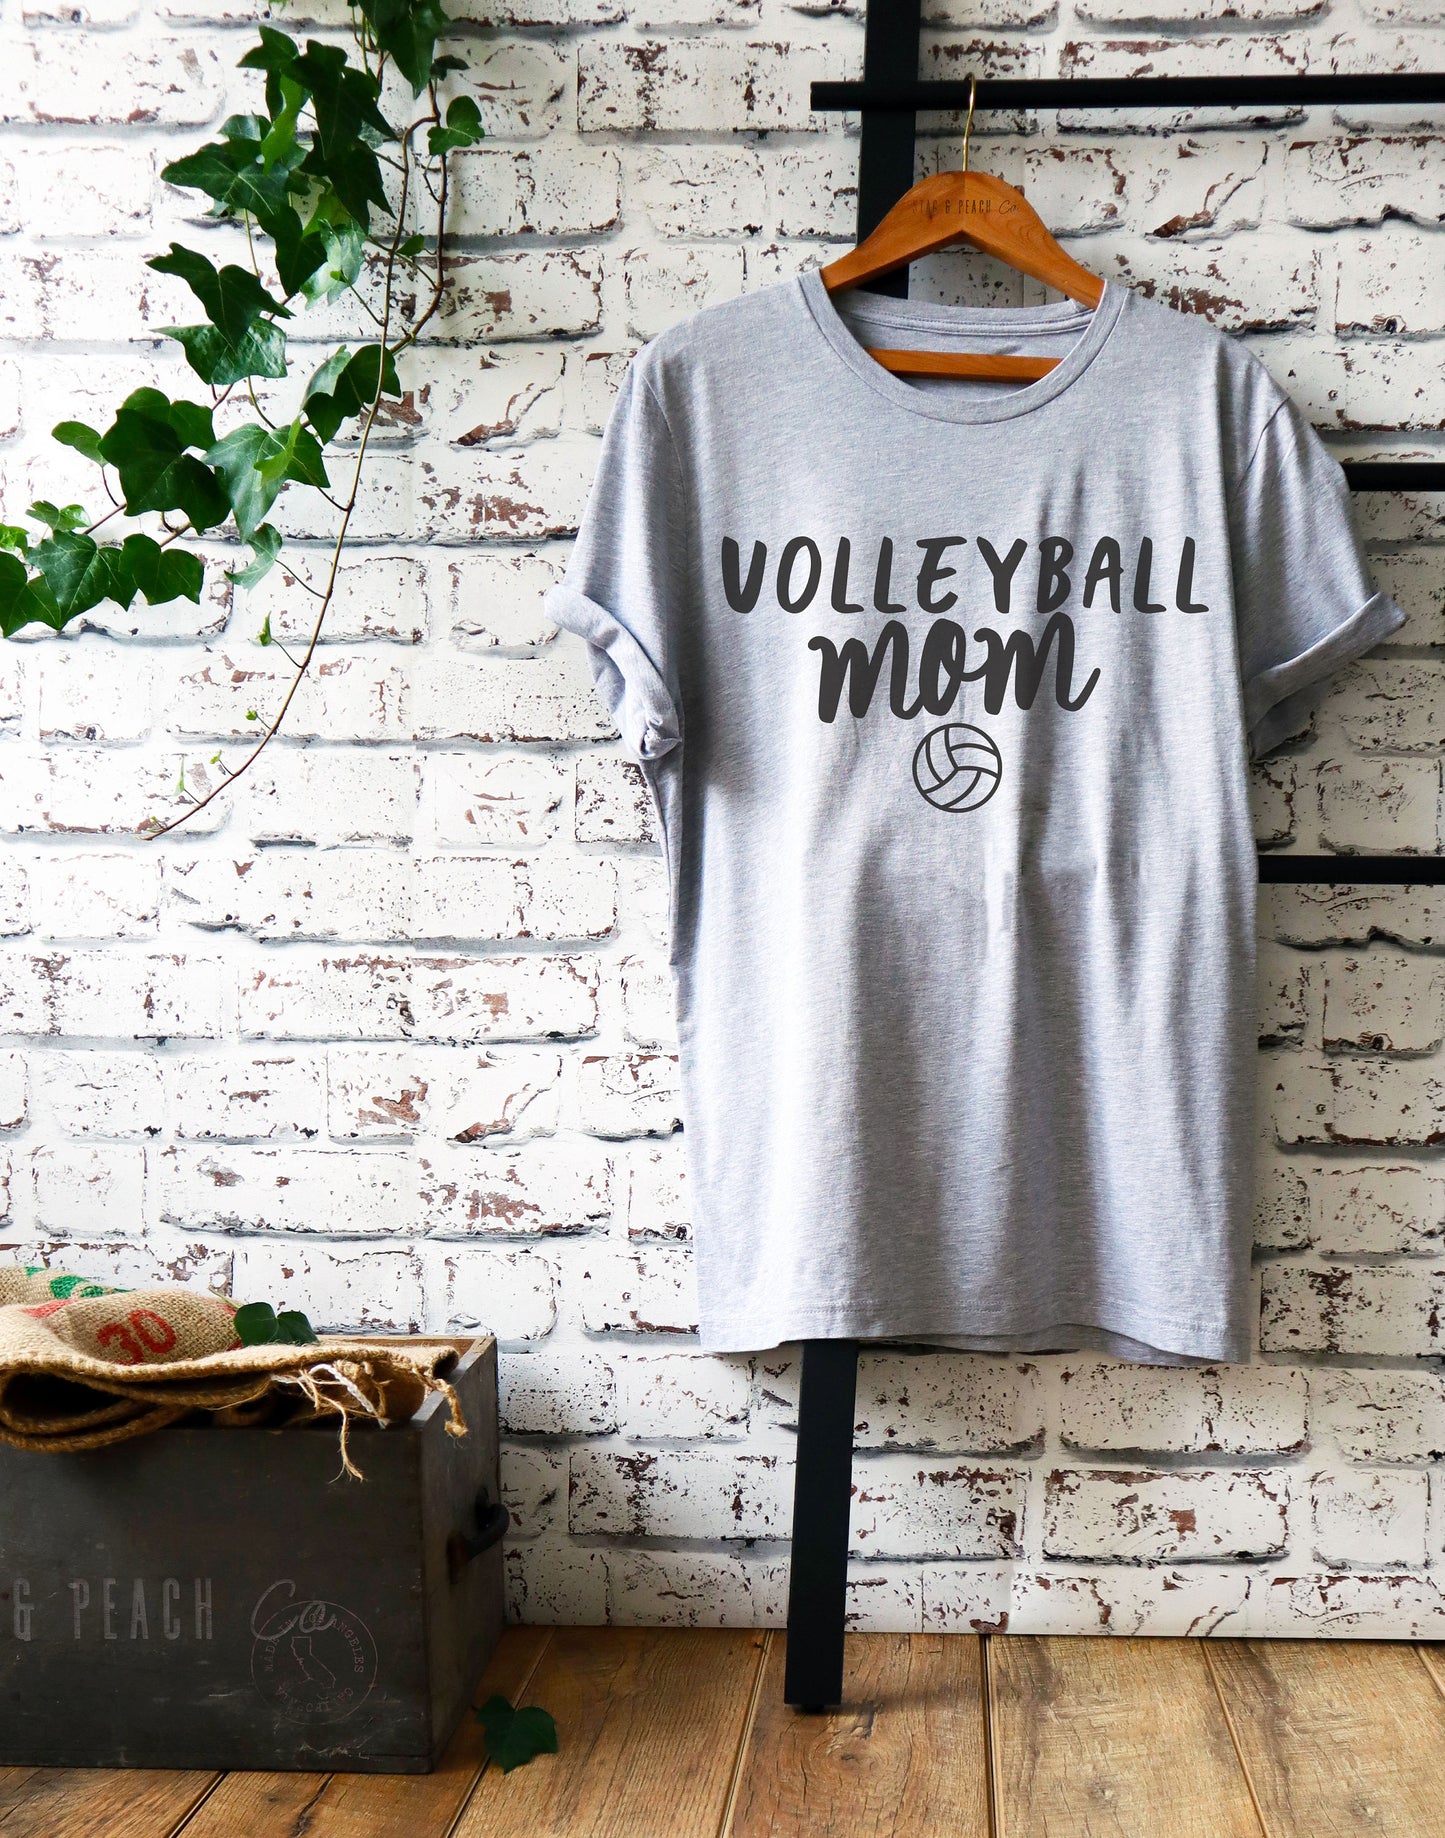 Volleyball Mom Unisex Shirt - Volleyball shirt, Volleyball mom shirt, Volleyball gift, Volleyball team, Volleyball player